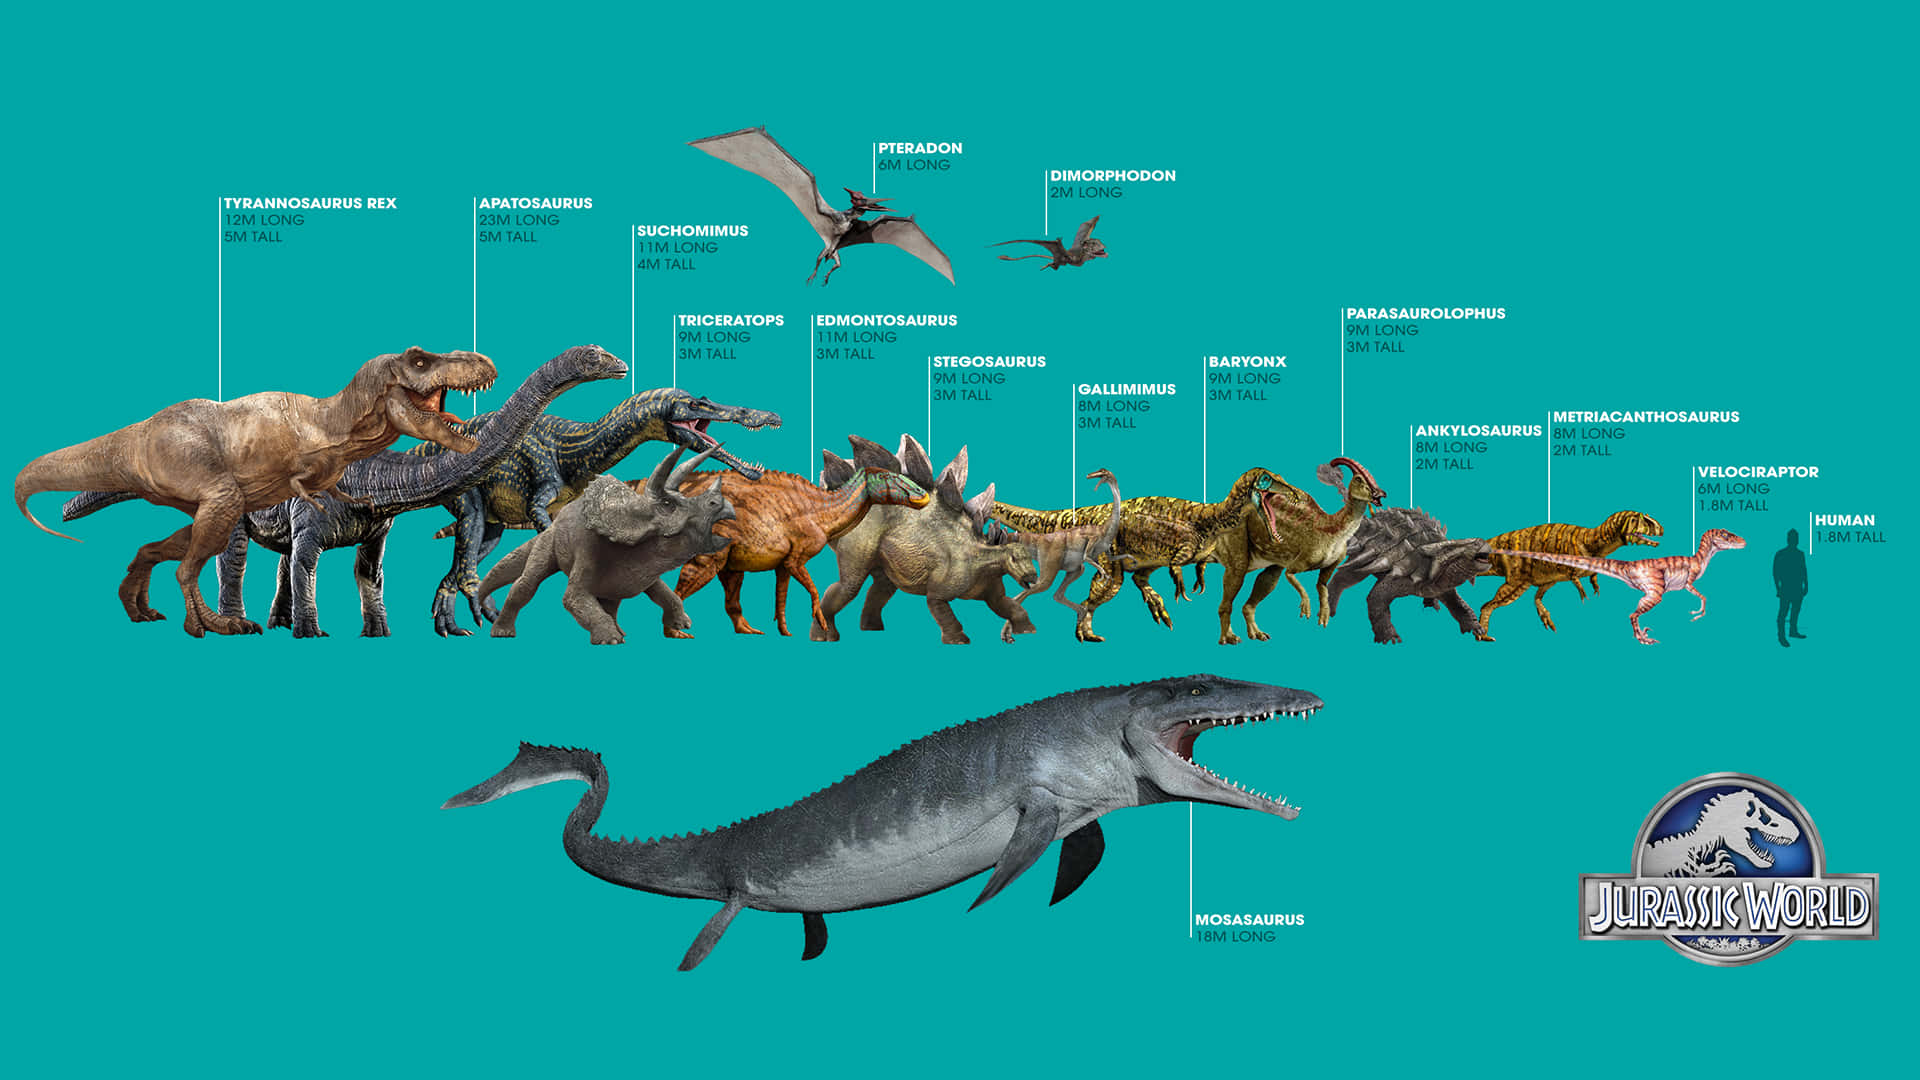 Jurassic World Dinosaurs - The Evolution Of Dinosaurs